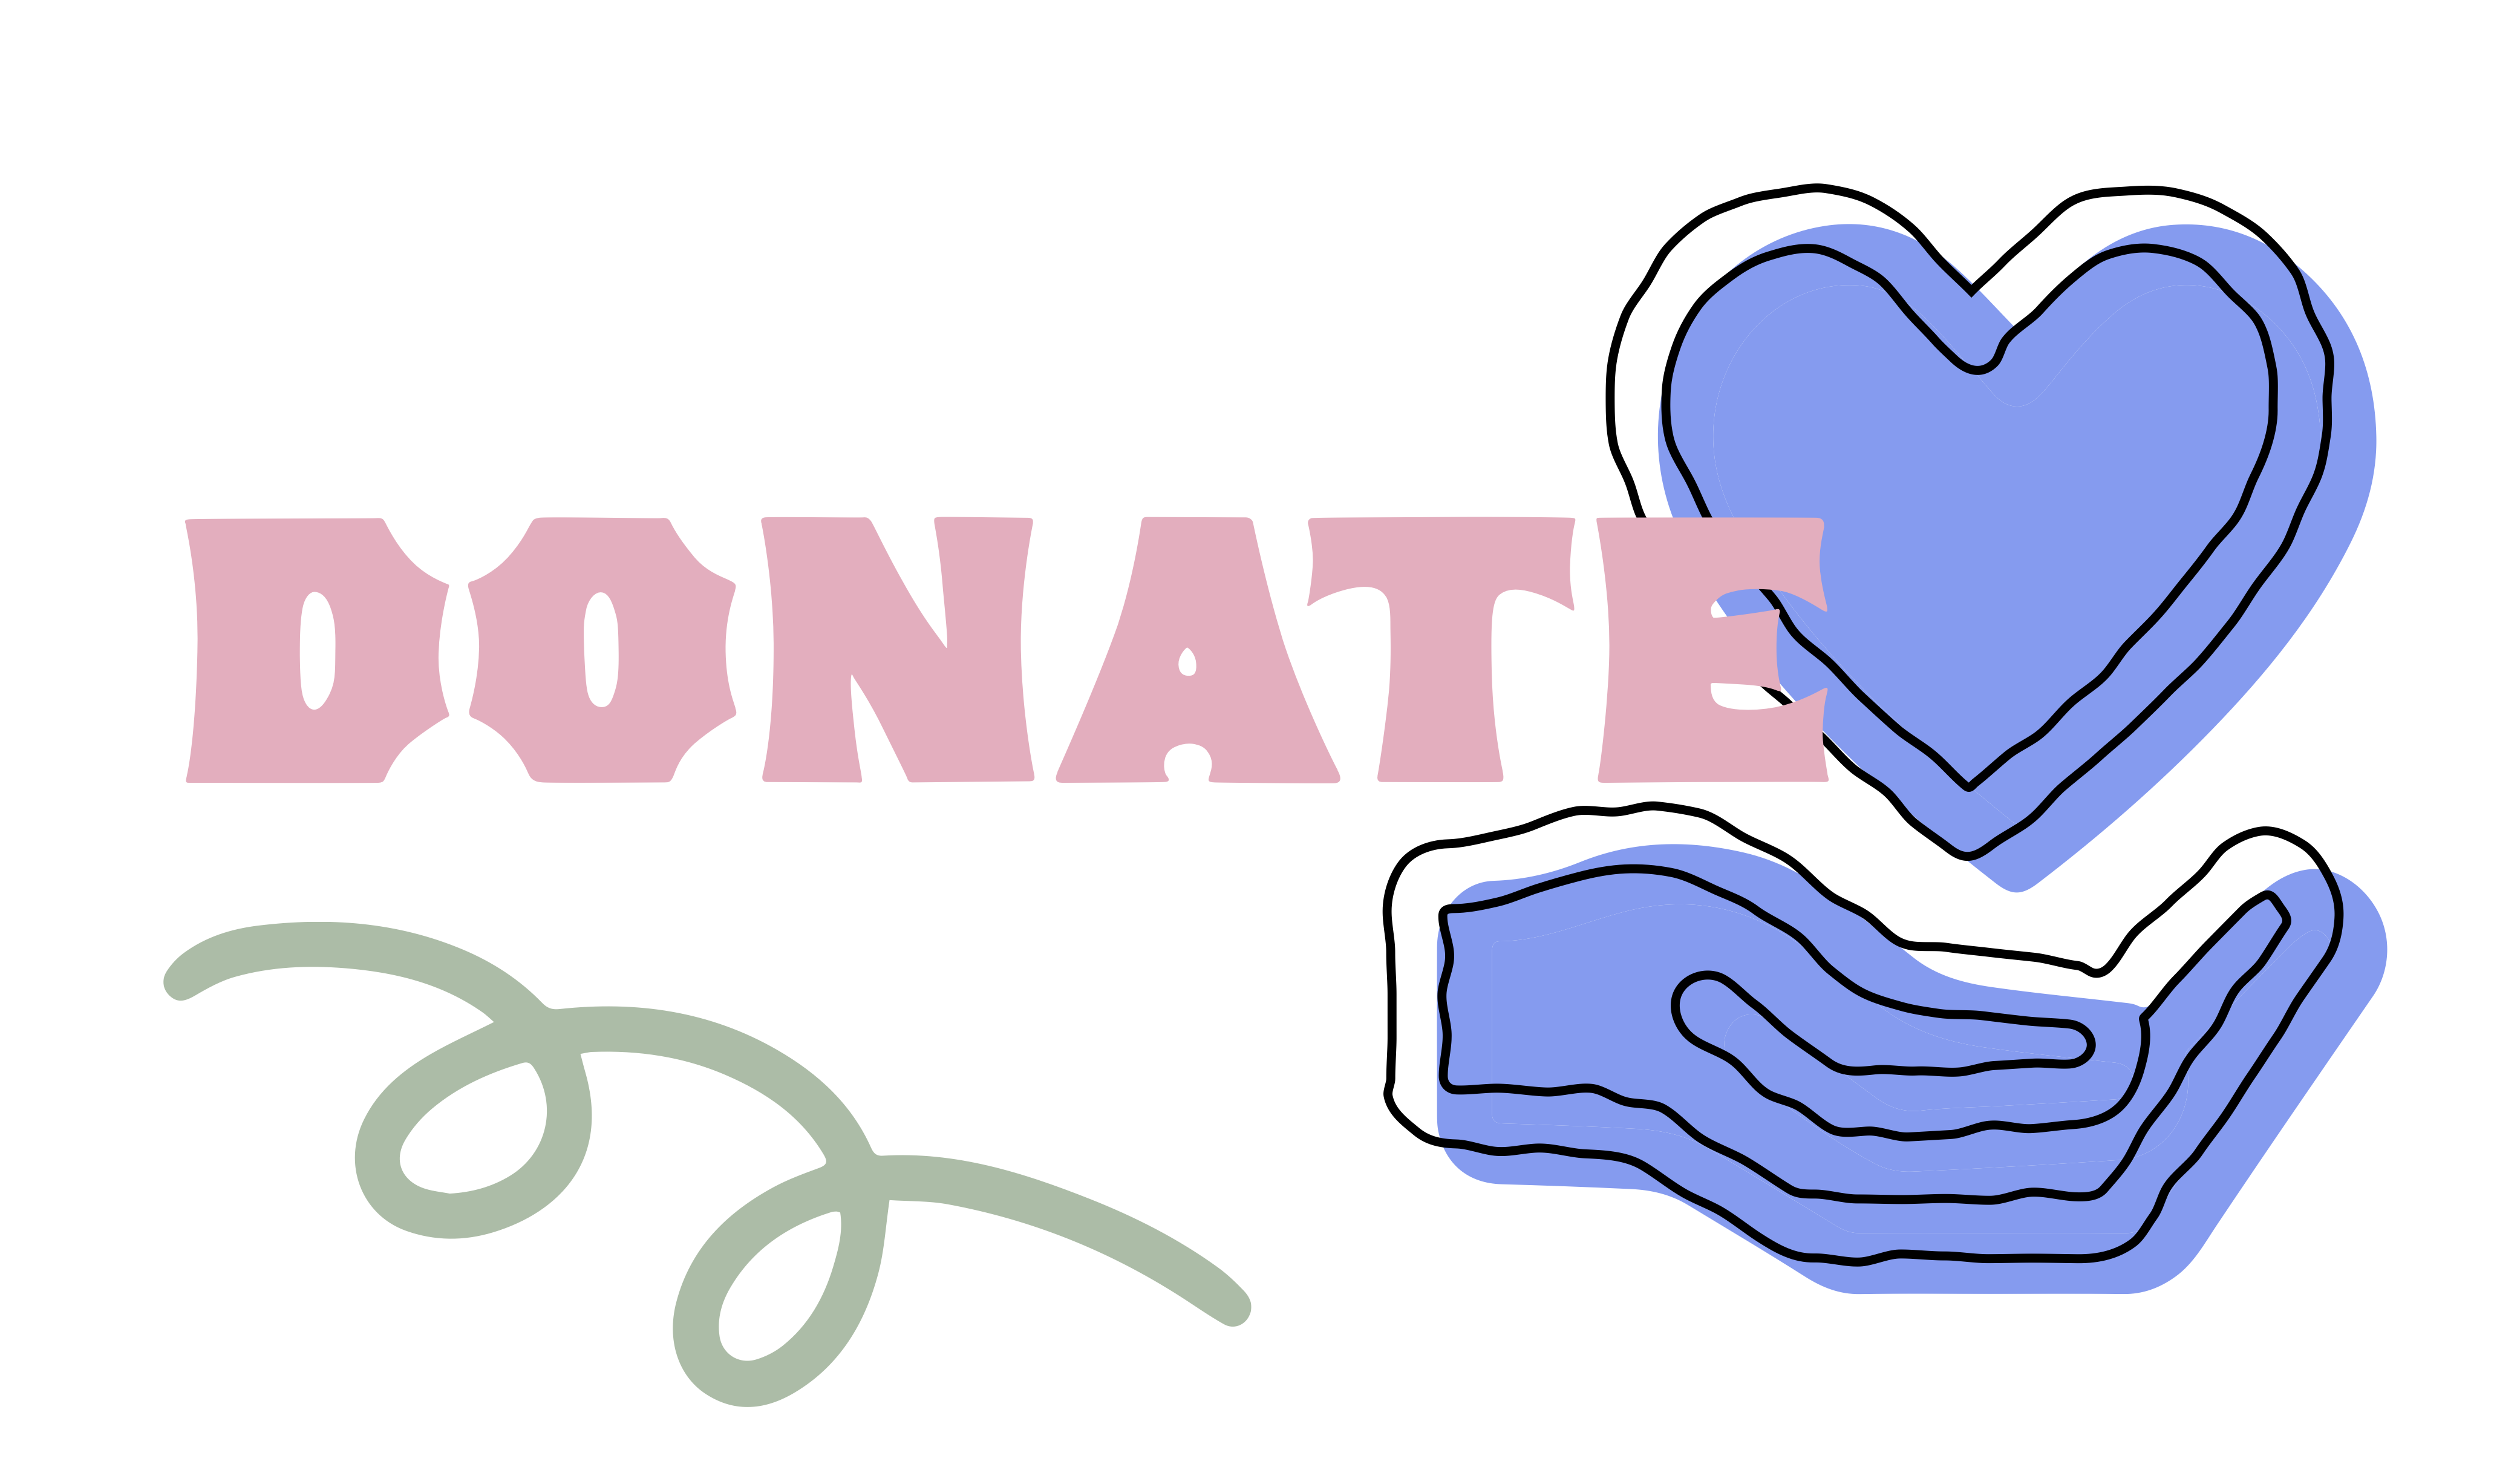 Donate to Latine-focused causes